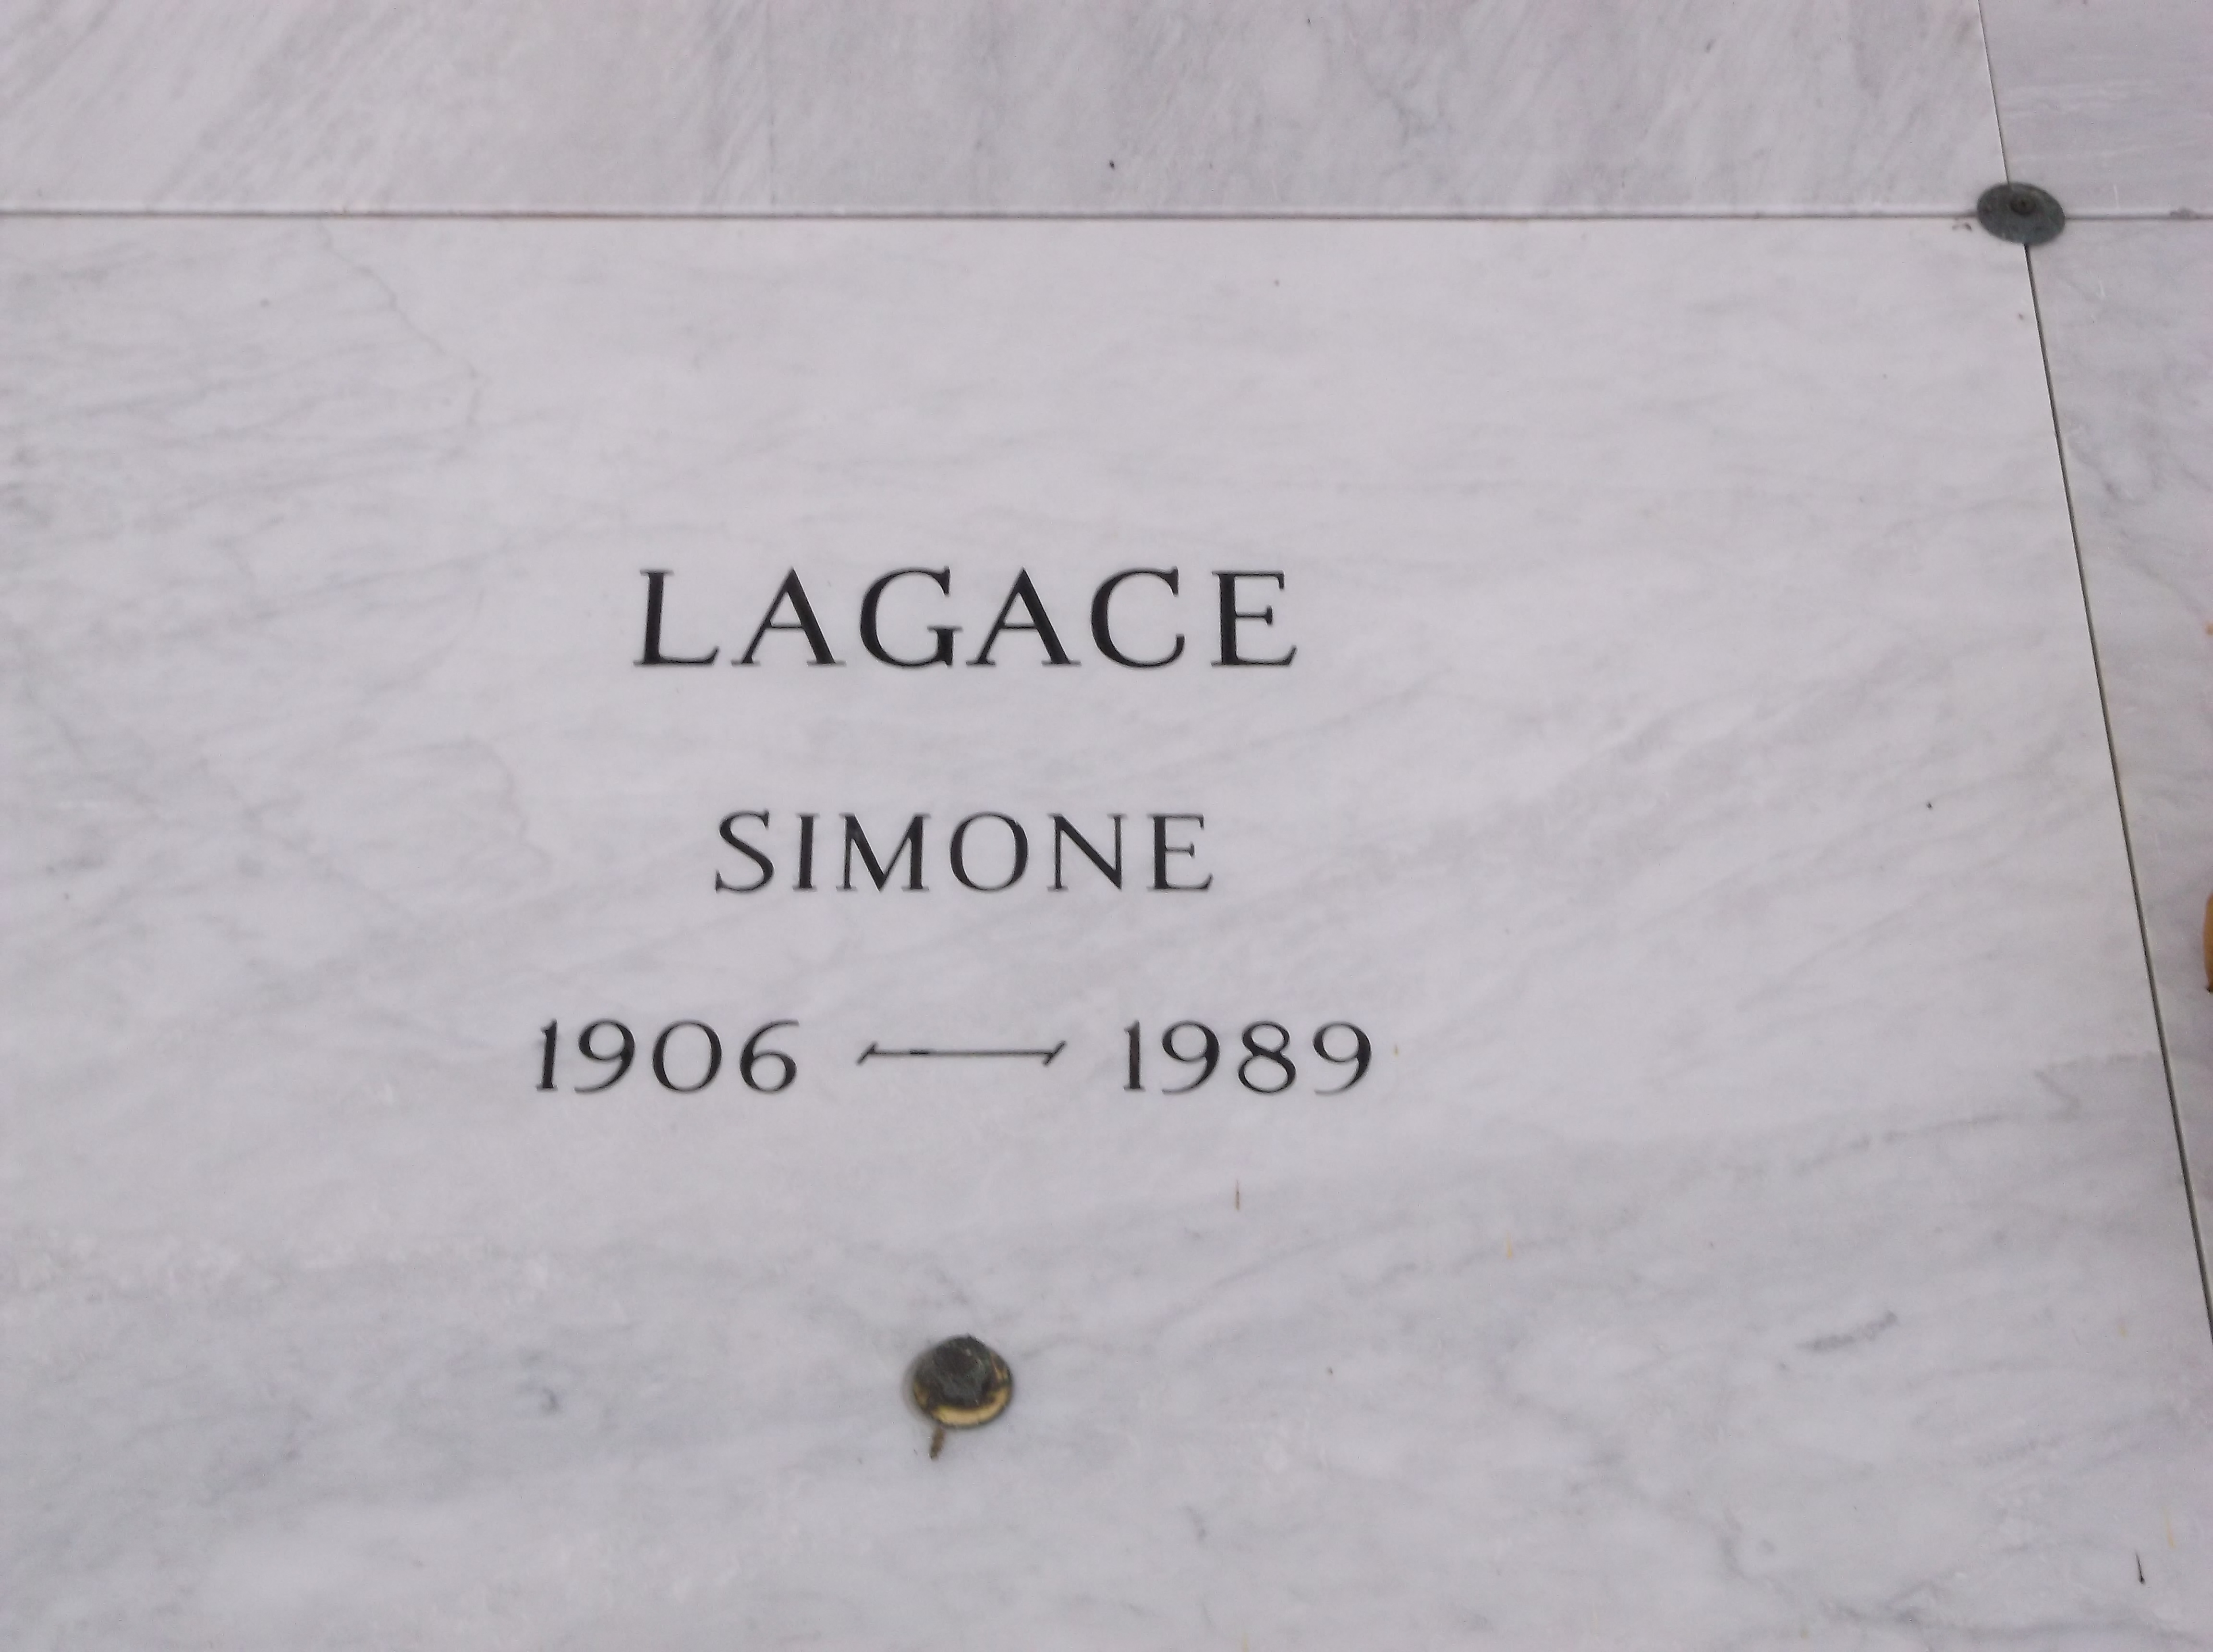 Simone Lagace